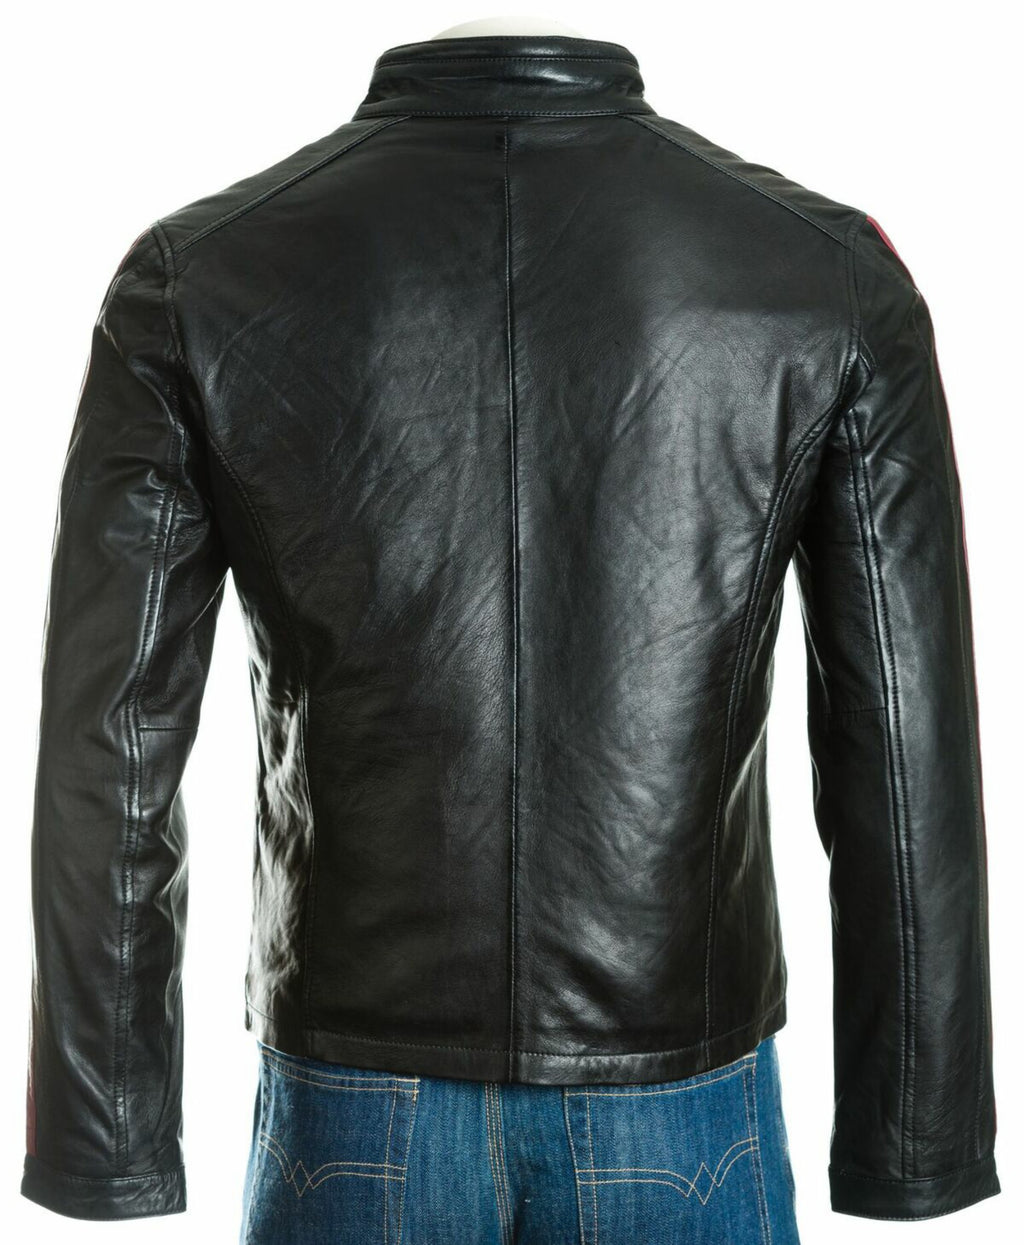 Men's Black Tab Collar Leather Biker Jacket with Contrast Stripe Detail: Gavino